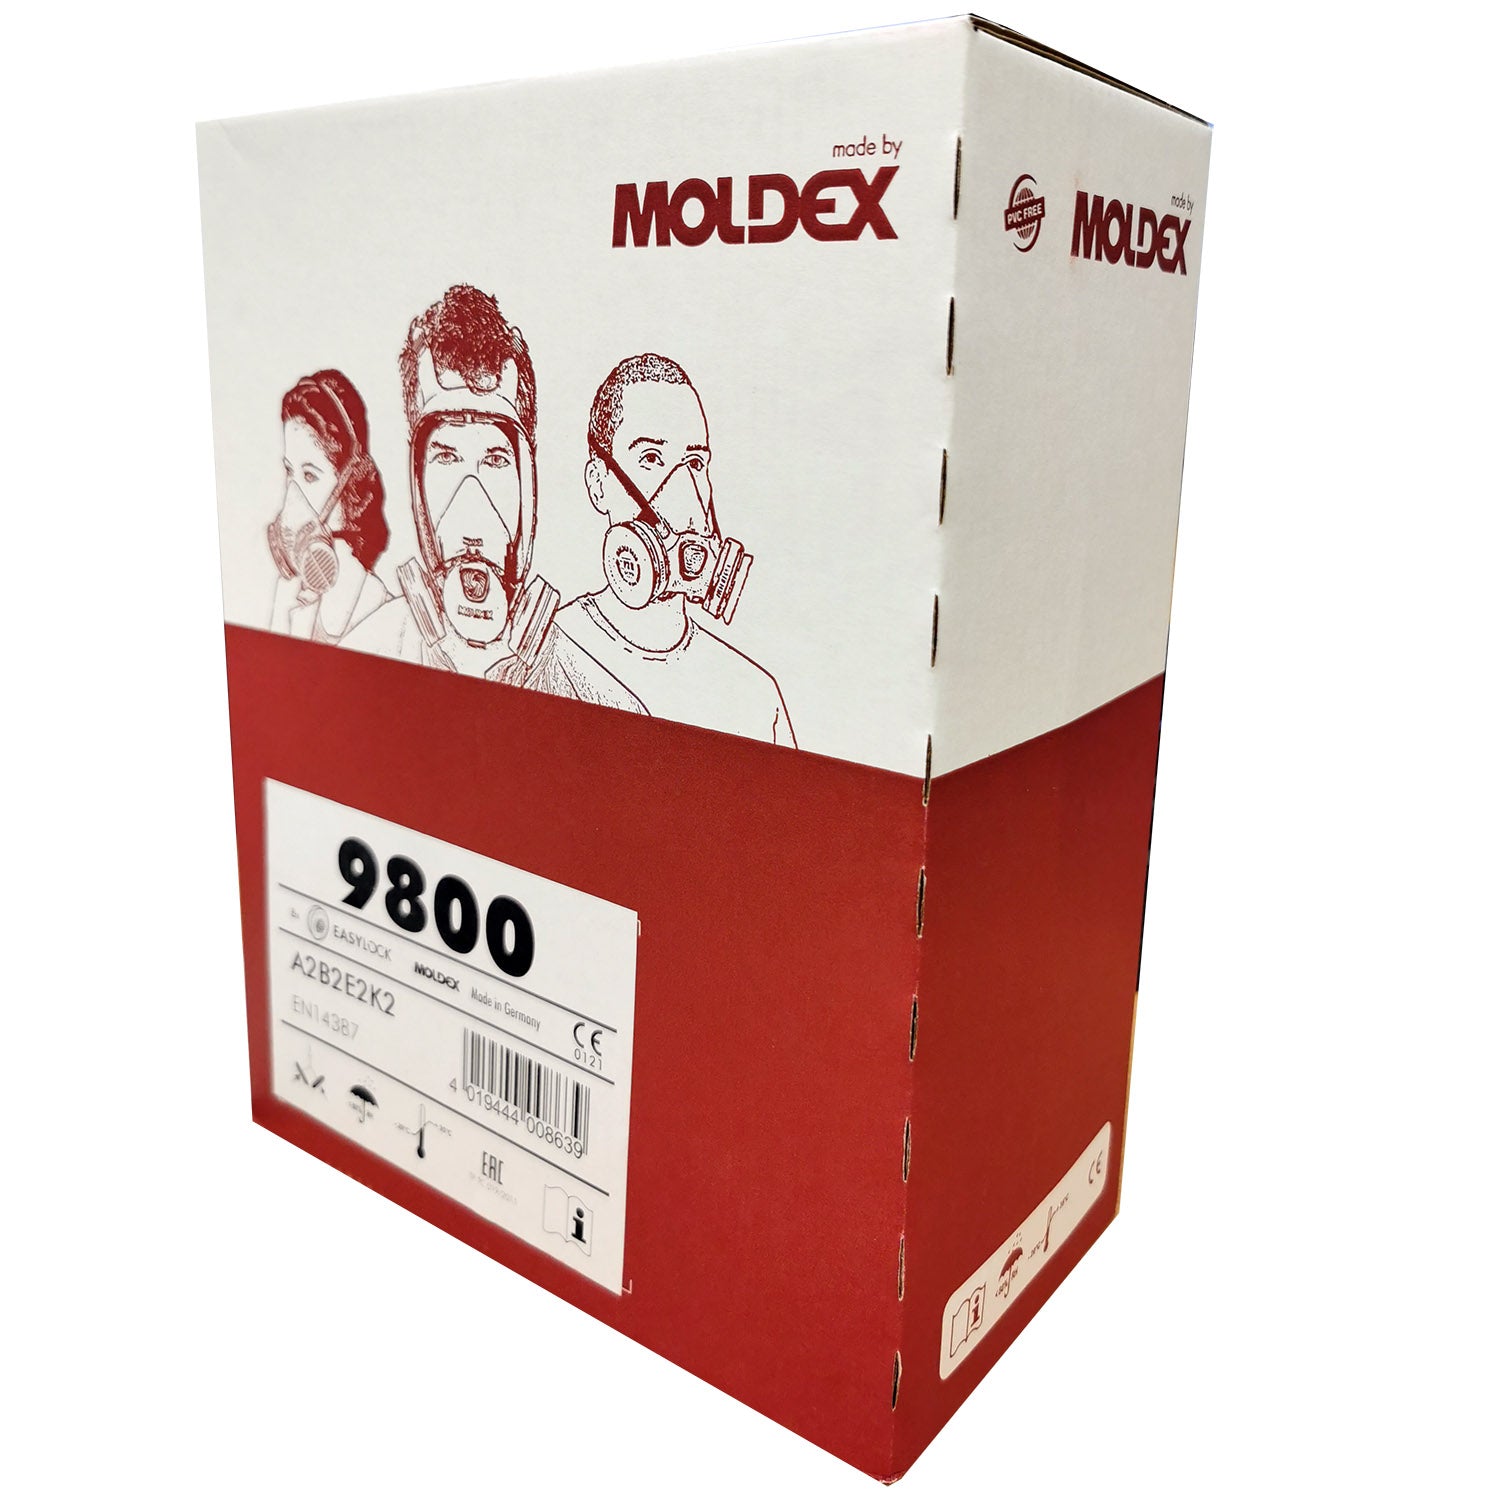 Moldex 9800 EasyLock A2B2E2K2 Gas Filters  Box